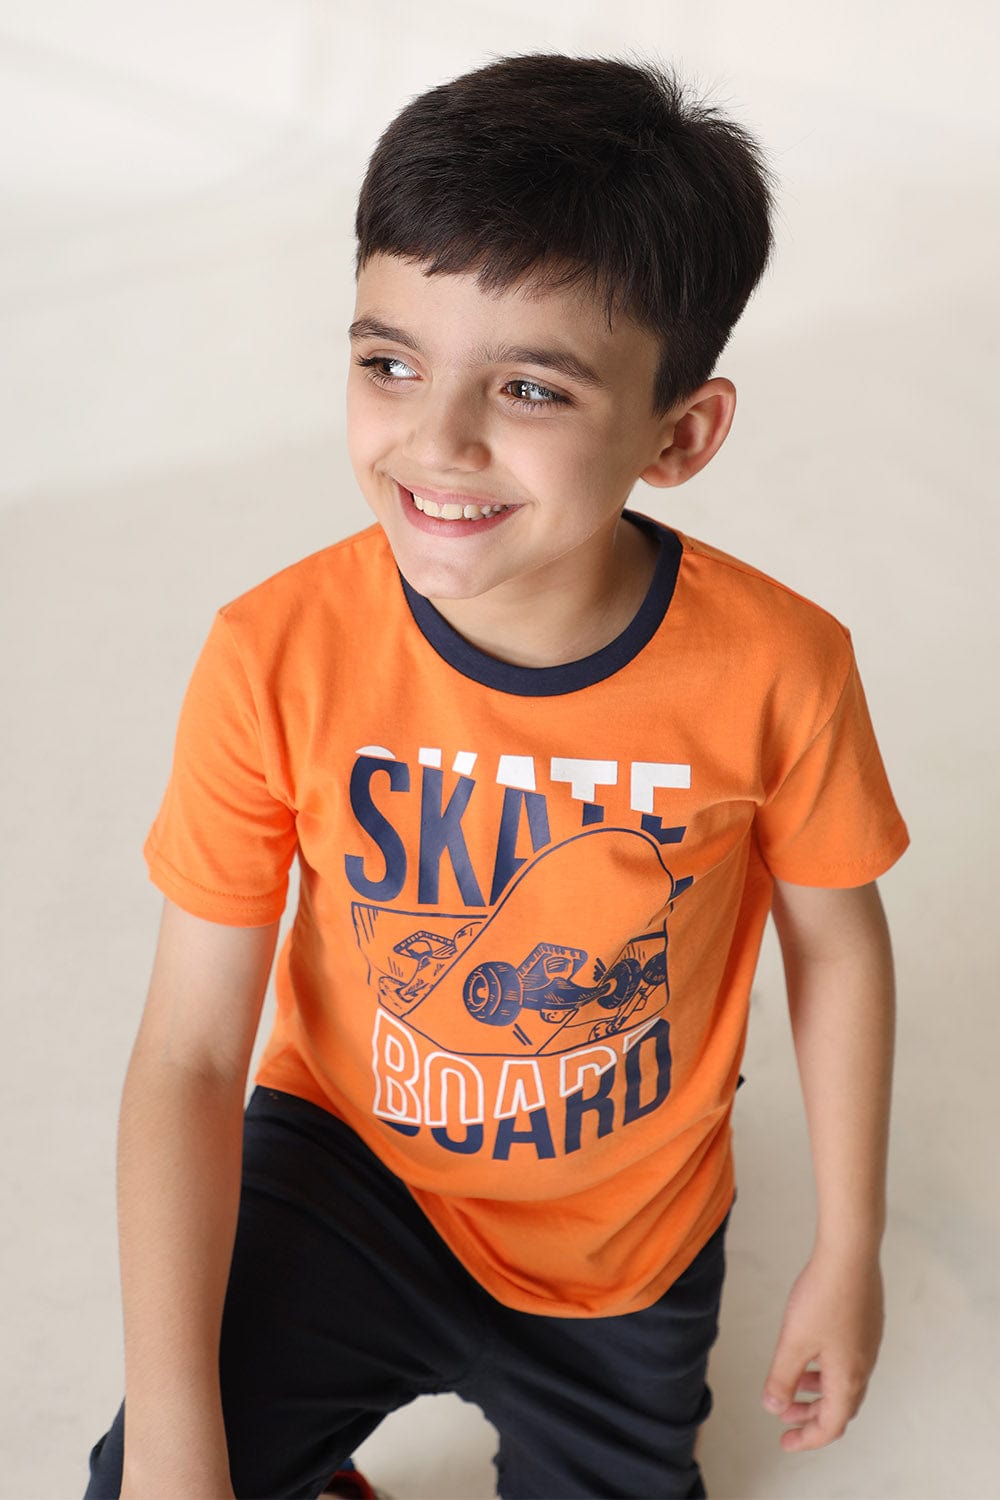 Hope Not Out by Shahid Afridi Girls Knit T-Shirt Boys Orange Skate Board T-Shirt